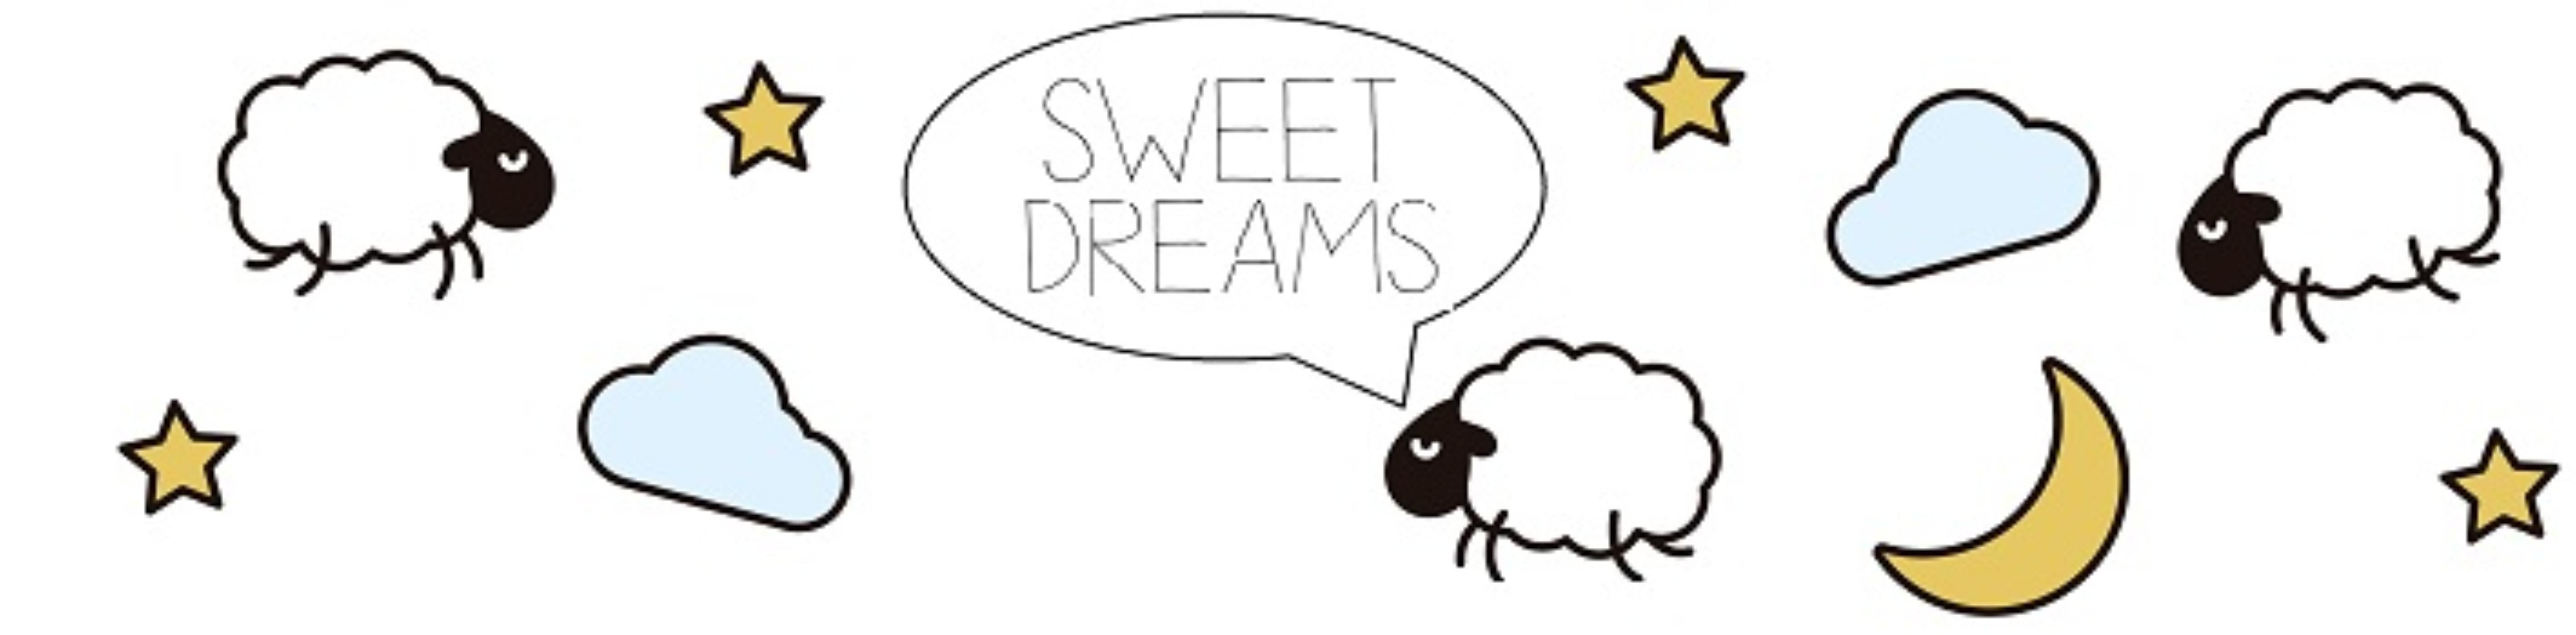 Sleep sheep illustration 